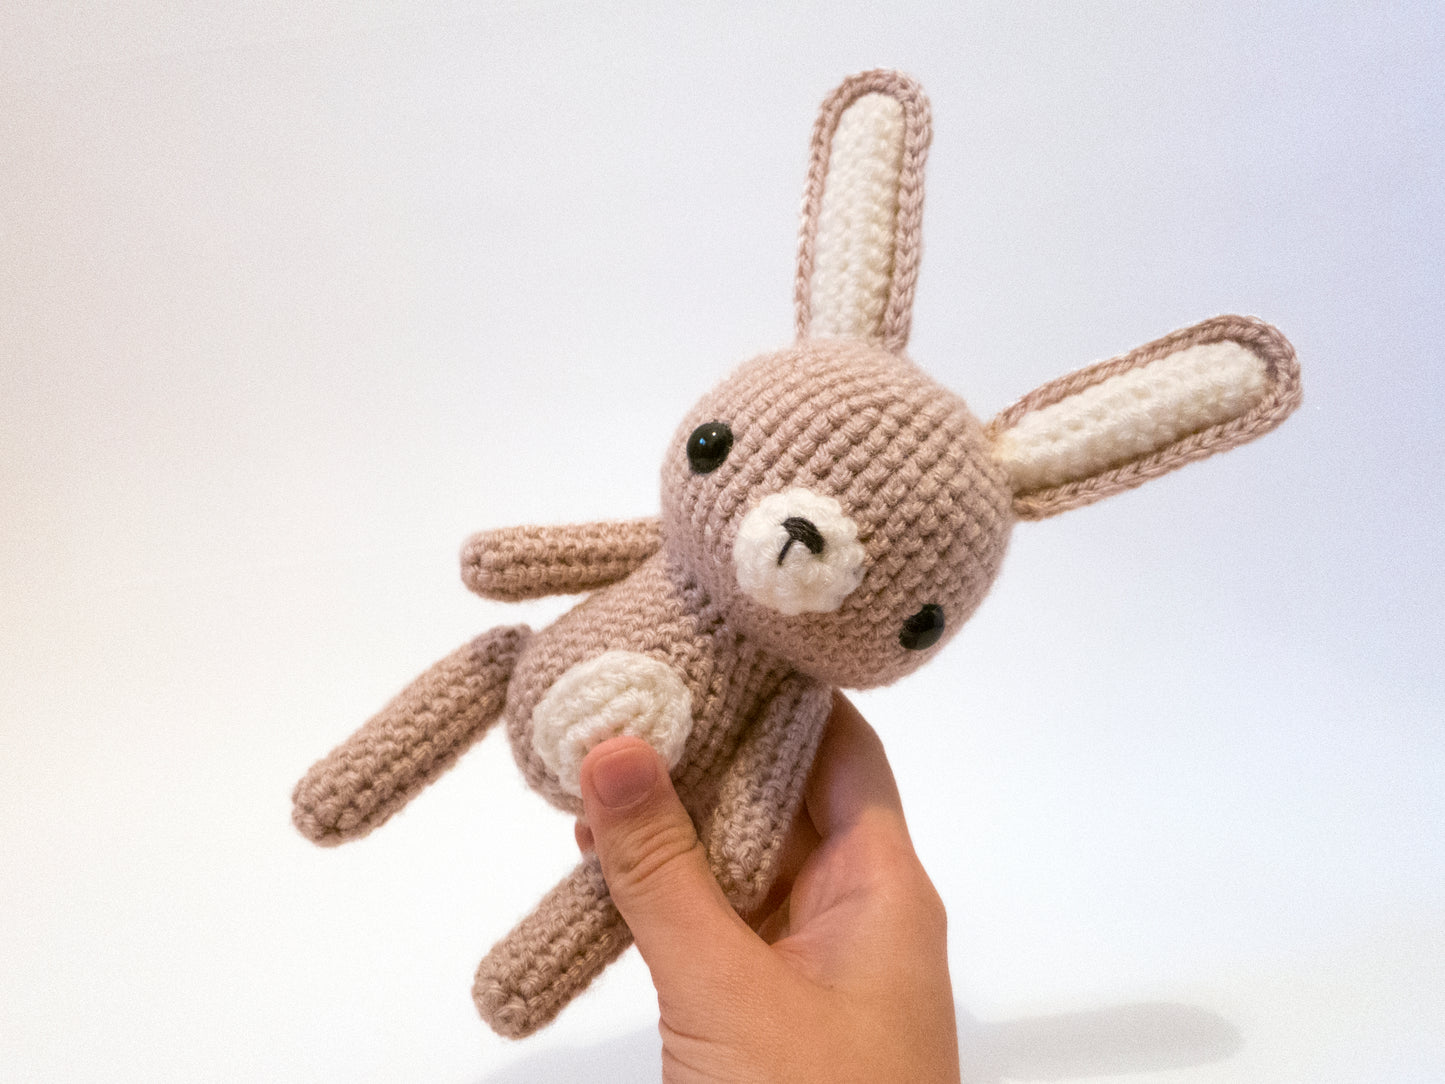 amigurumi crochet rabbit pattern in hand for size comparison